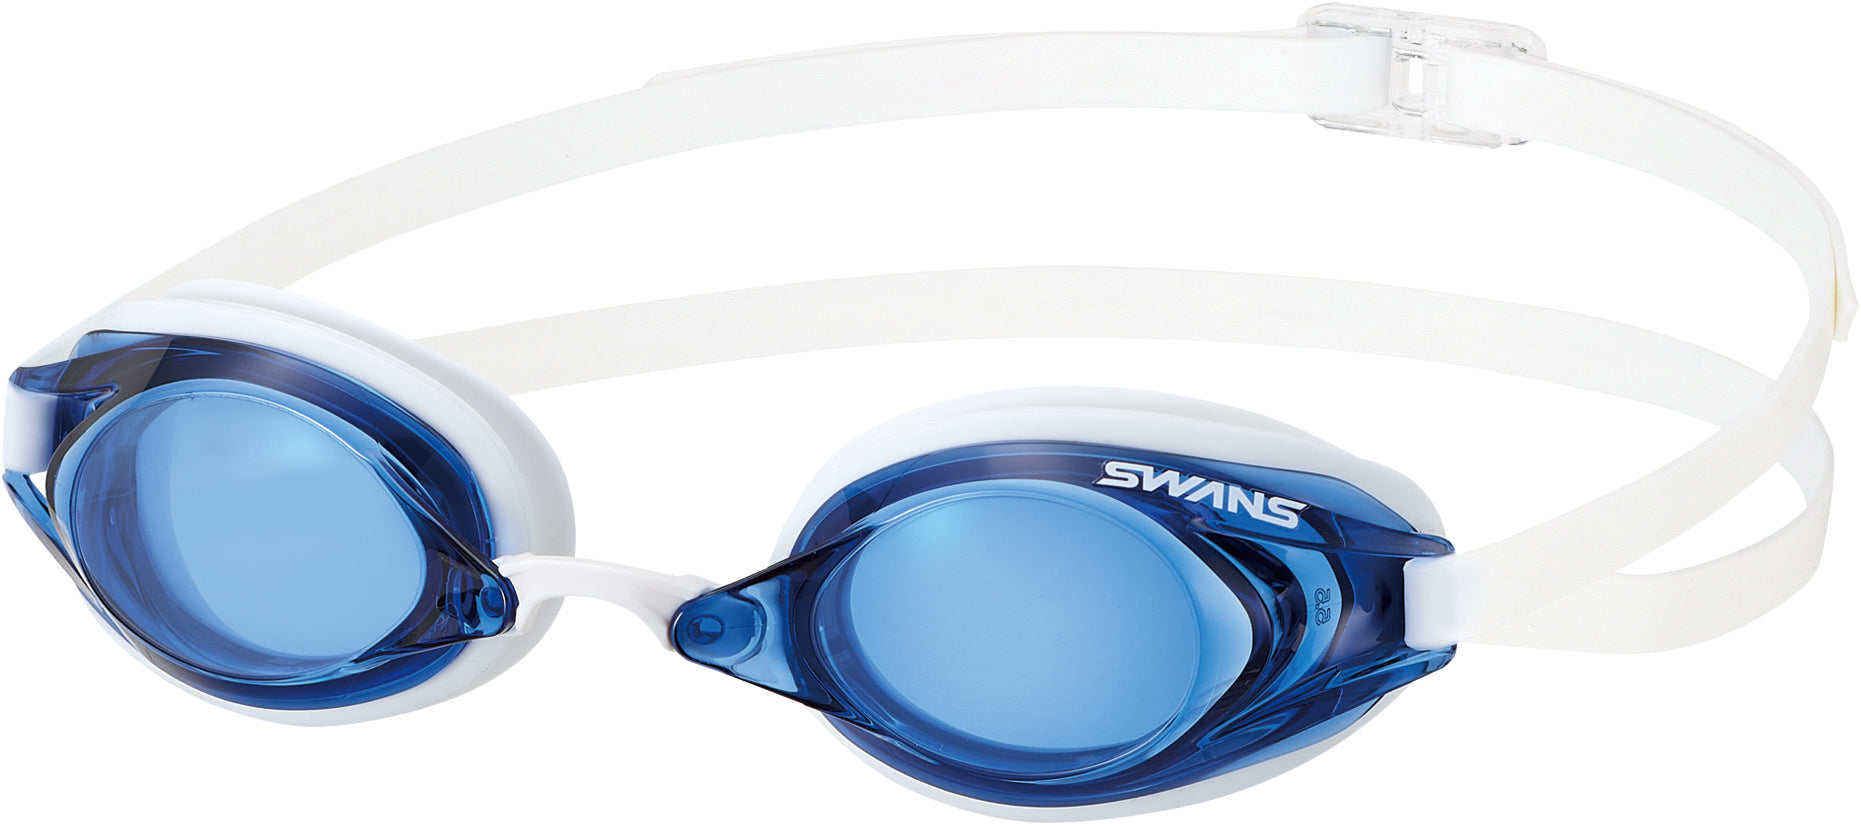 SR2 Prescription Goggles Navy/Blue Clear